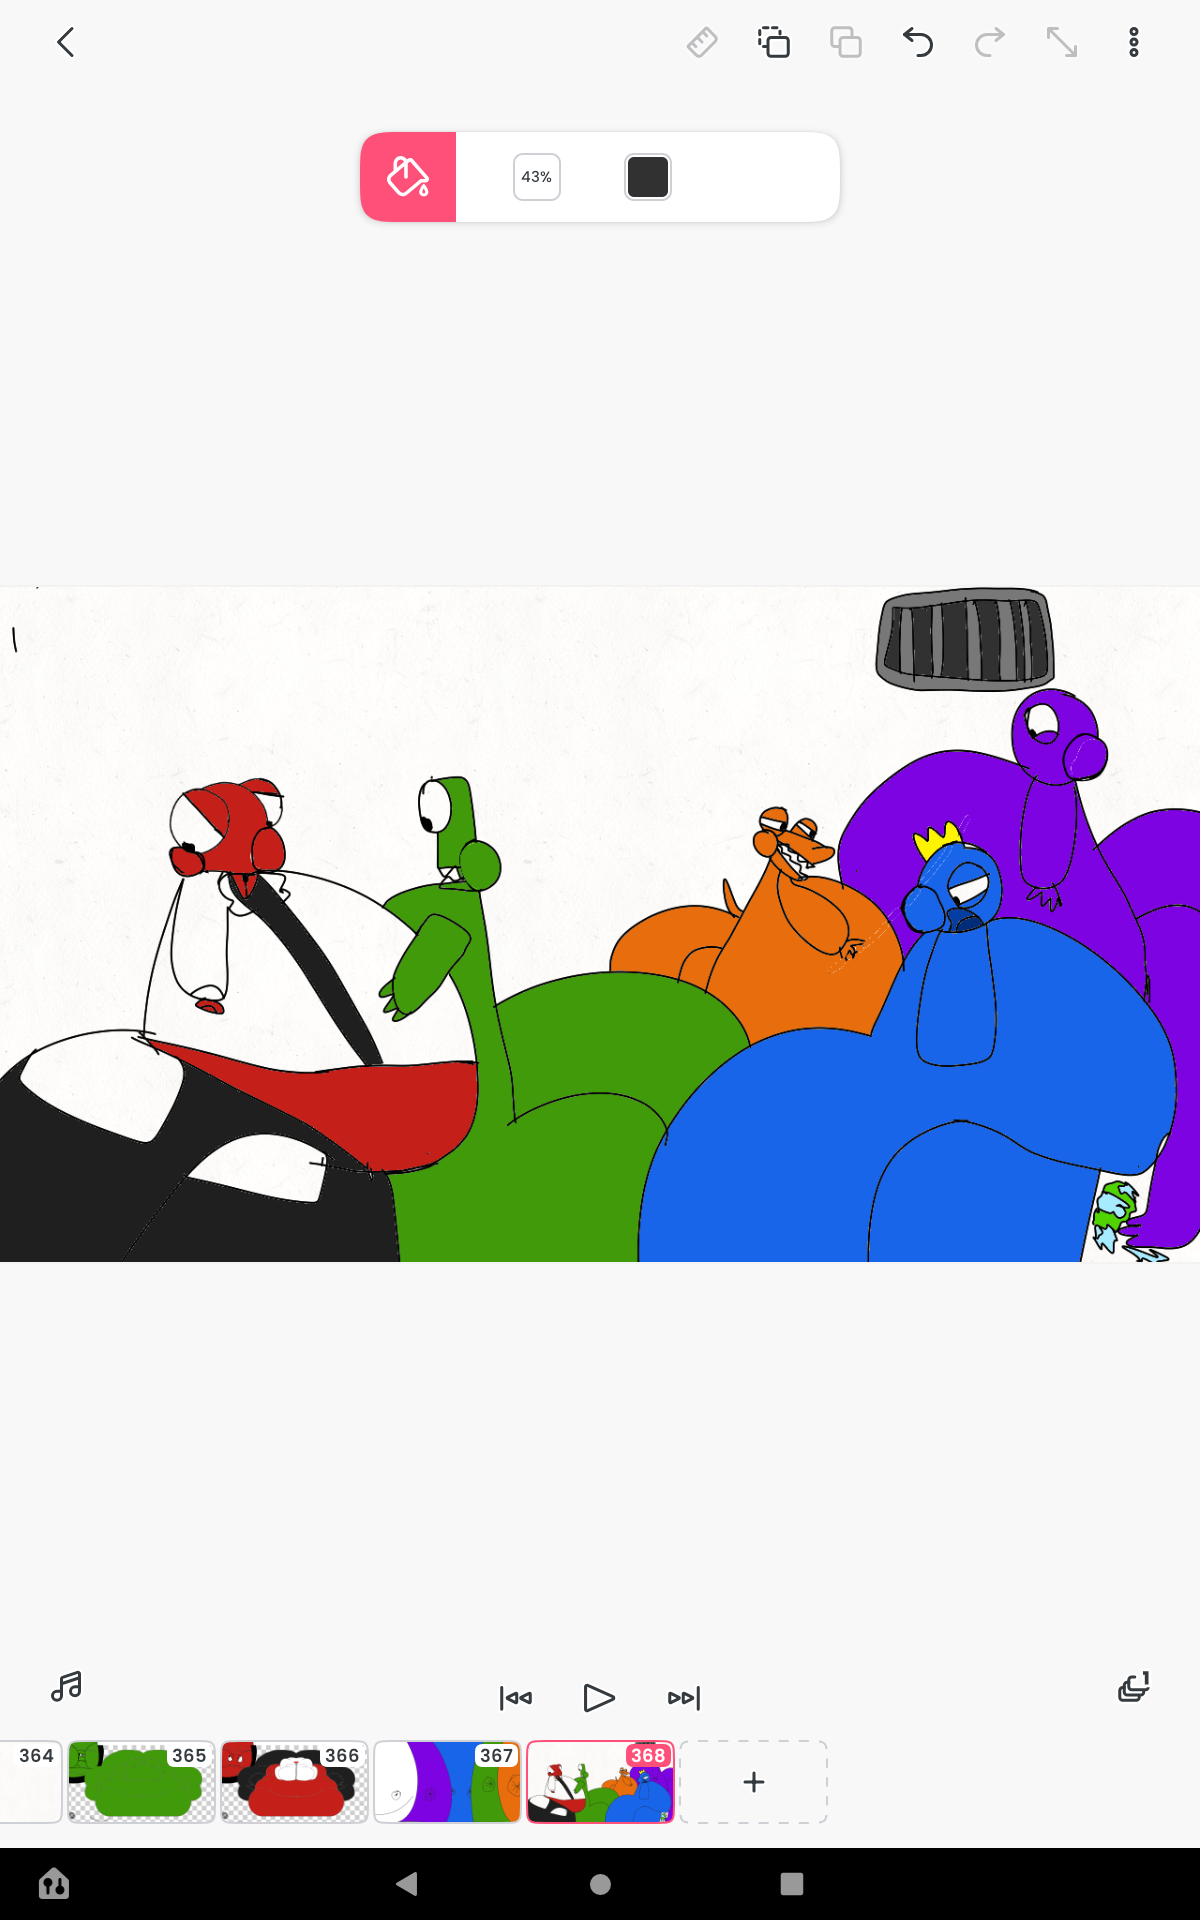 Rainbow friends gametoons fat spell by rainbowfriends37437 on DeviantArt